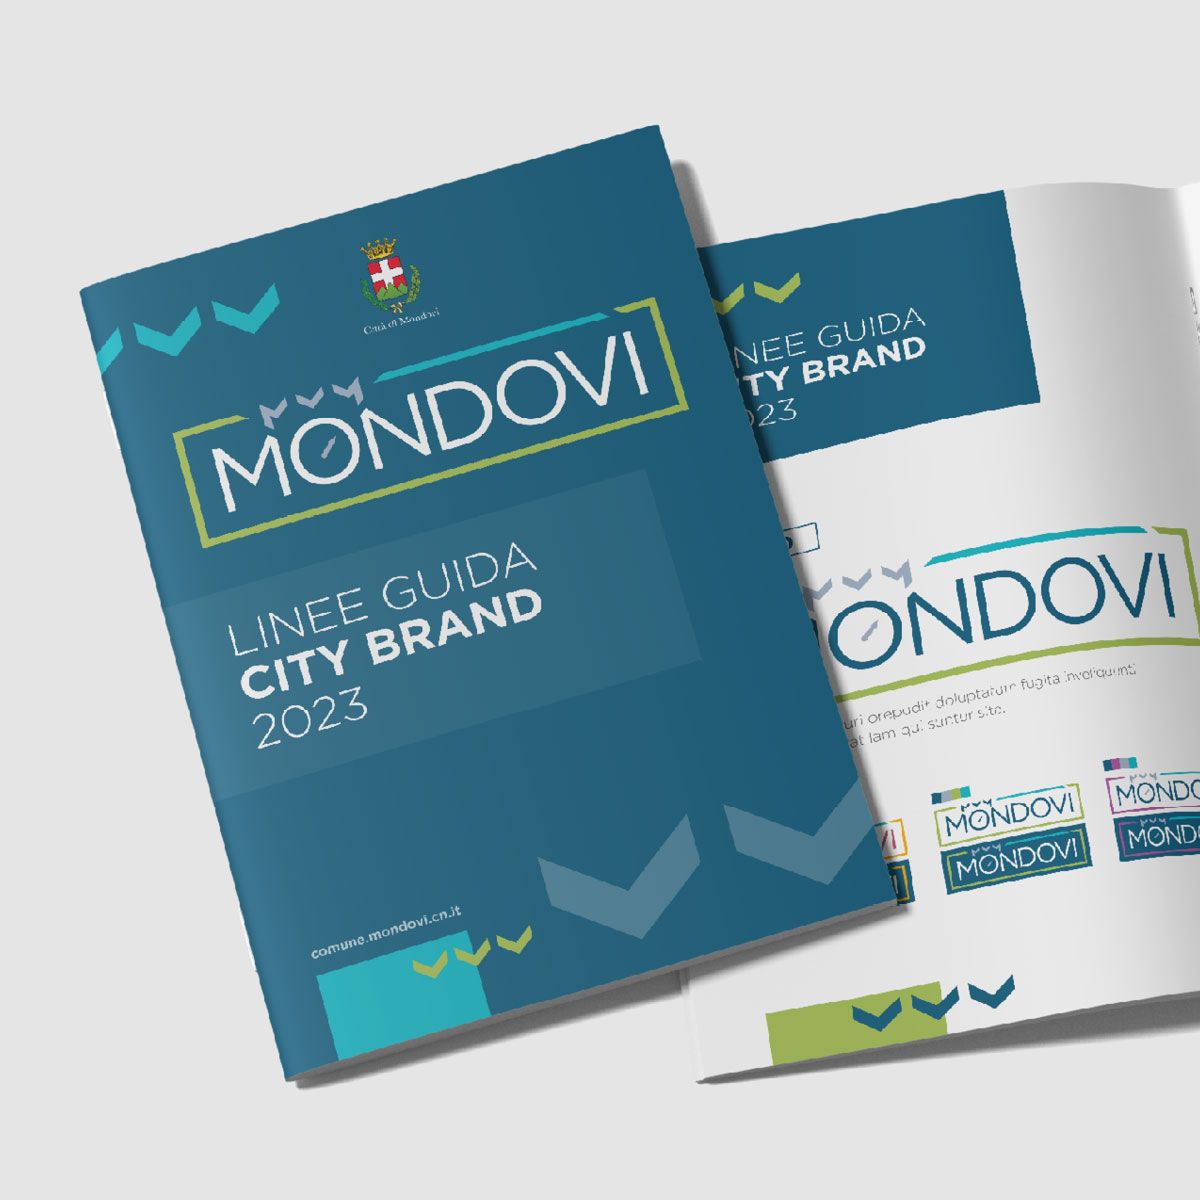 City Branding Mondovì